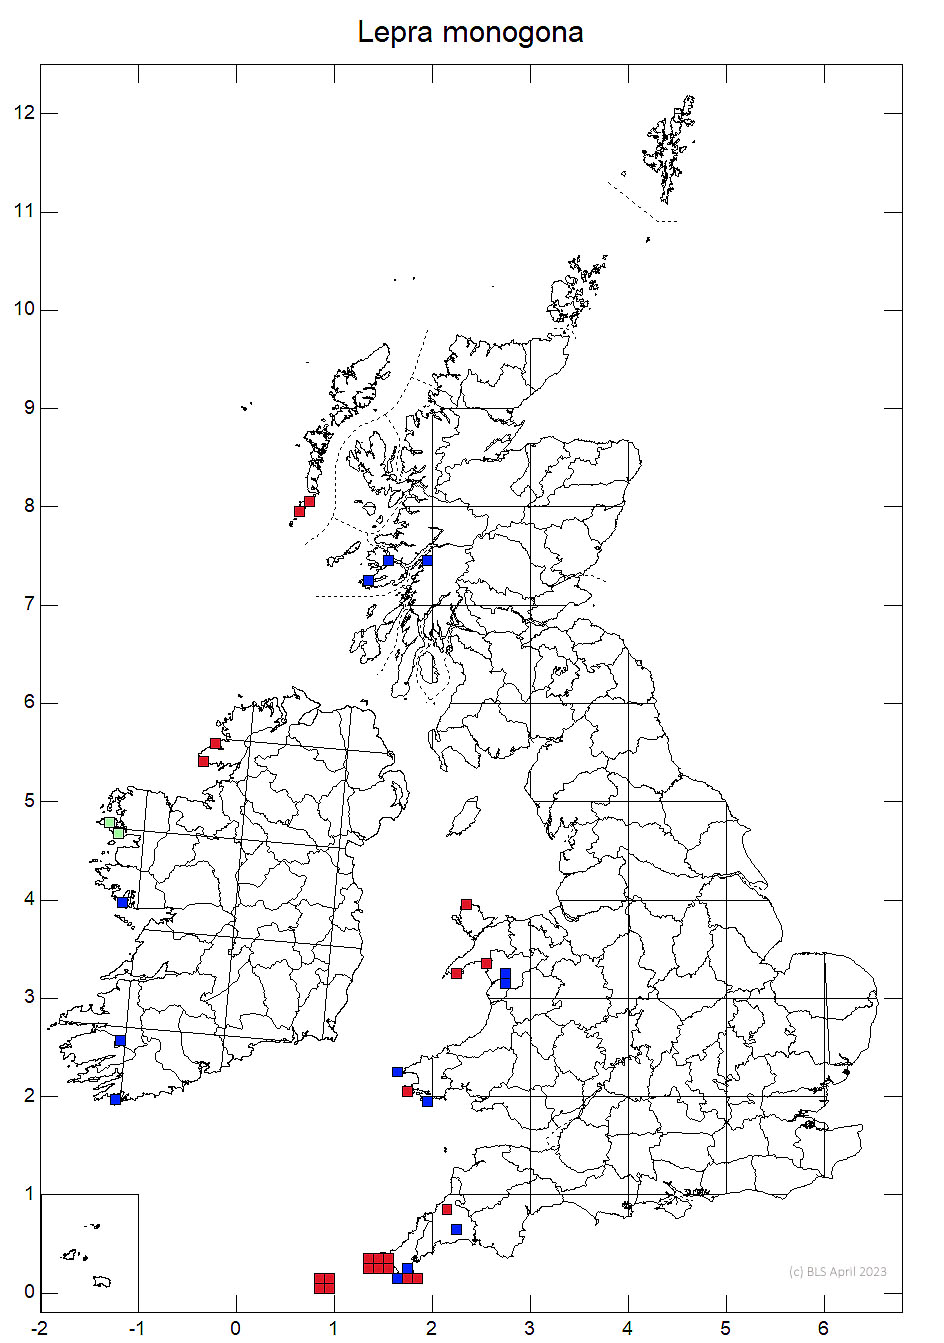 Lepra monogona 10km sq distribution map